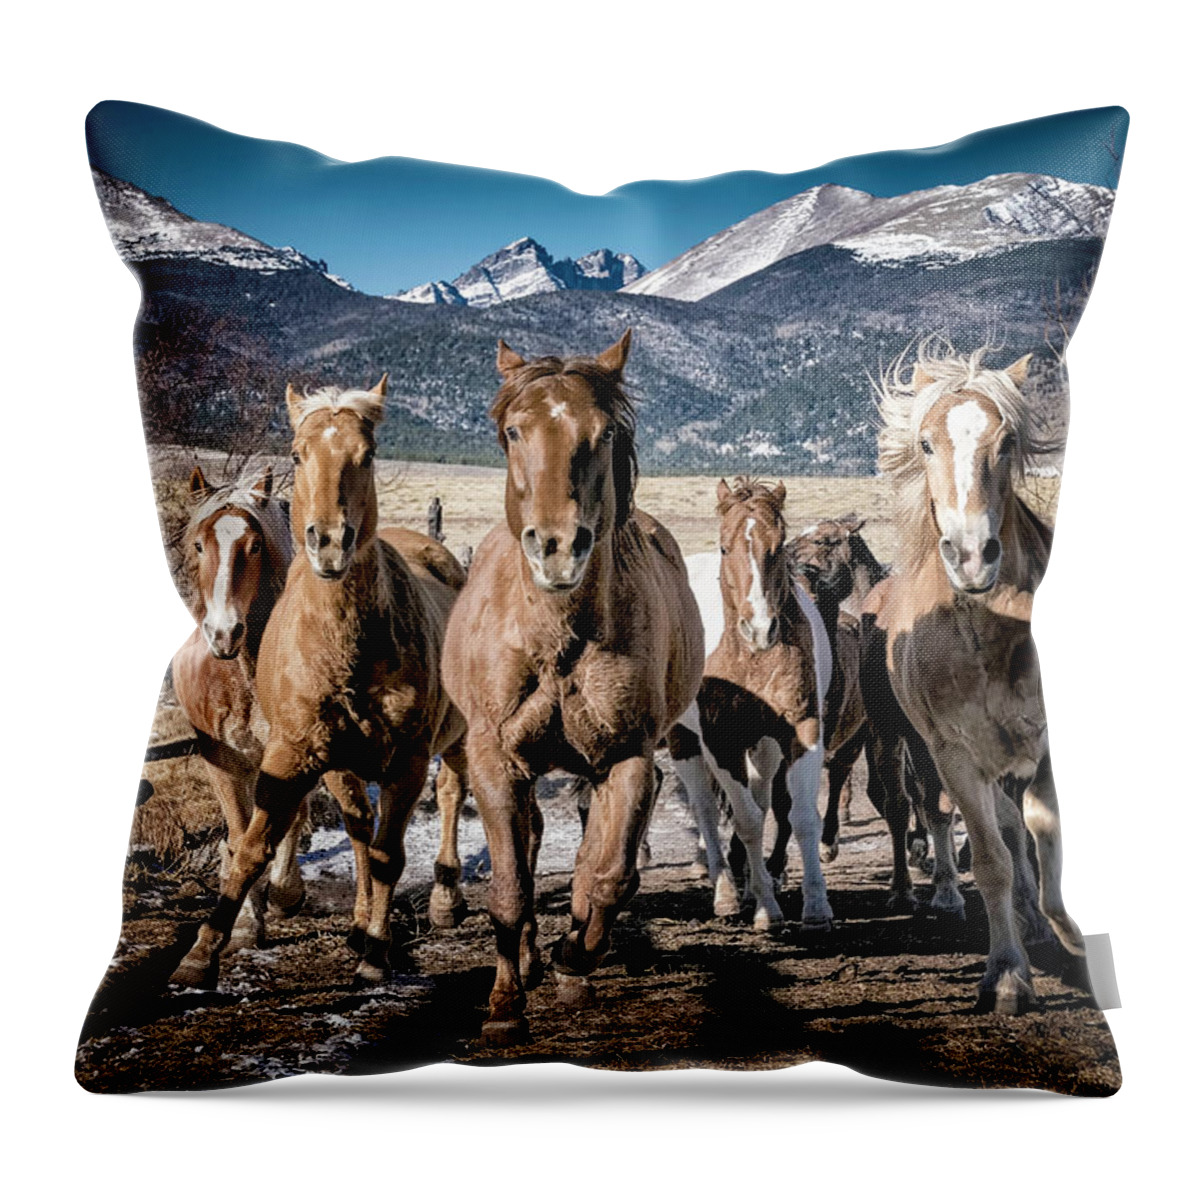 Horses Throw Pillow featuring the photograph Colorado Horses by David Soldano